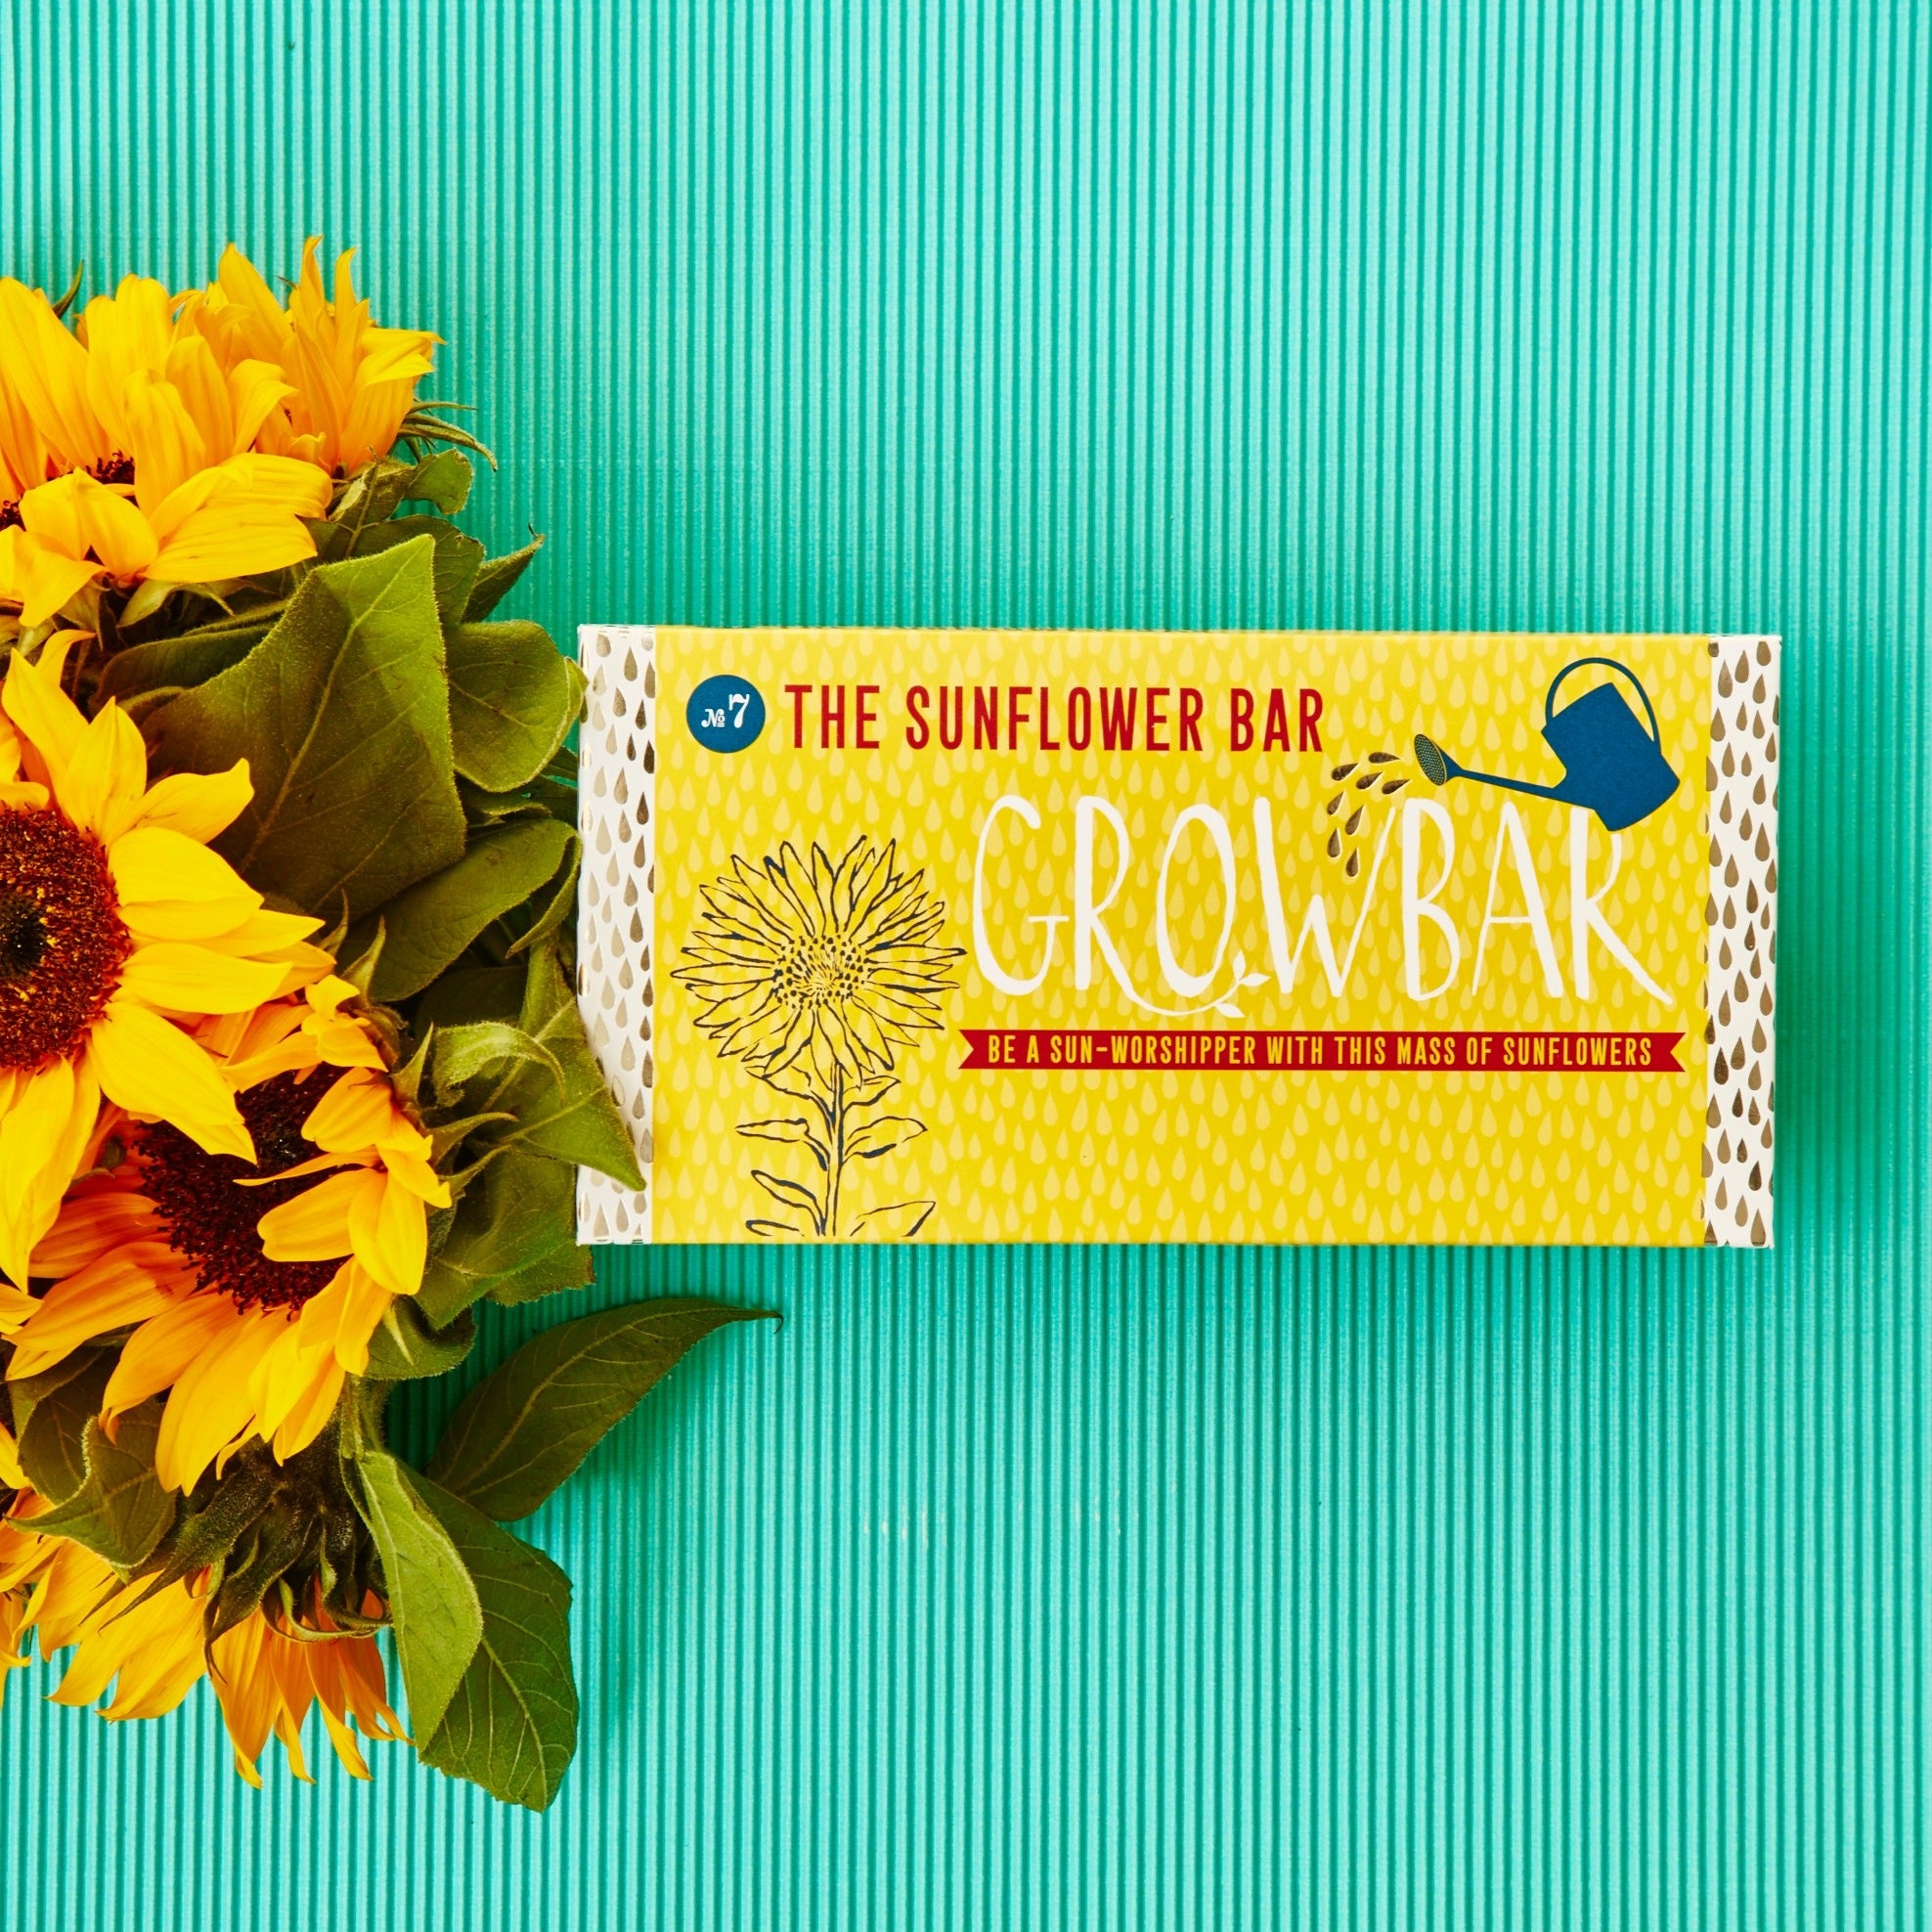 Growbar- The Sunflower Bar